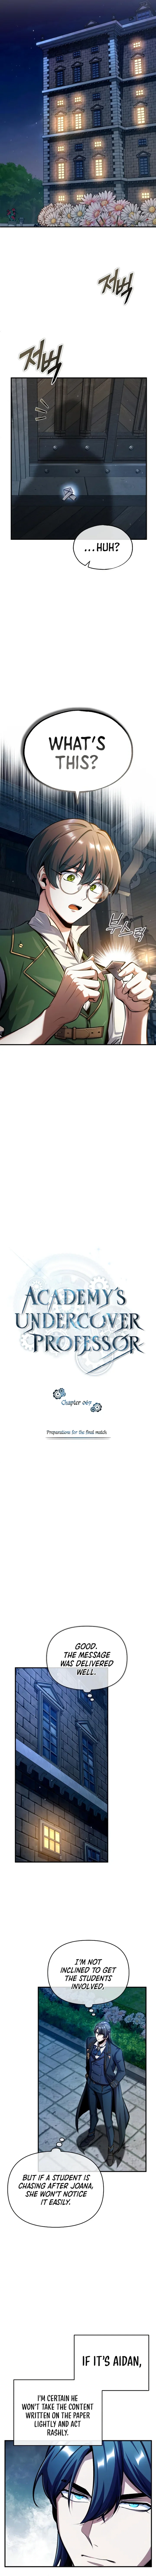 academys-undercover-professor-chap-67-5